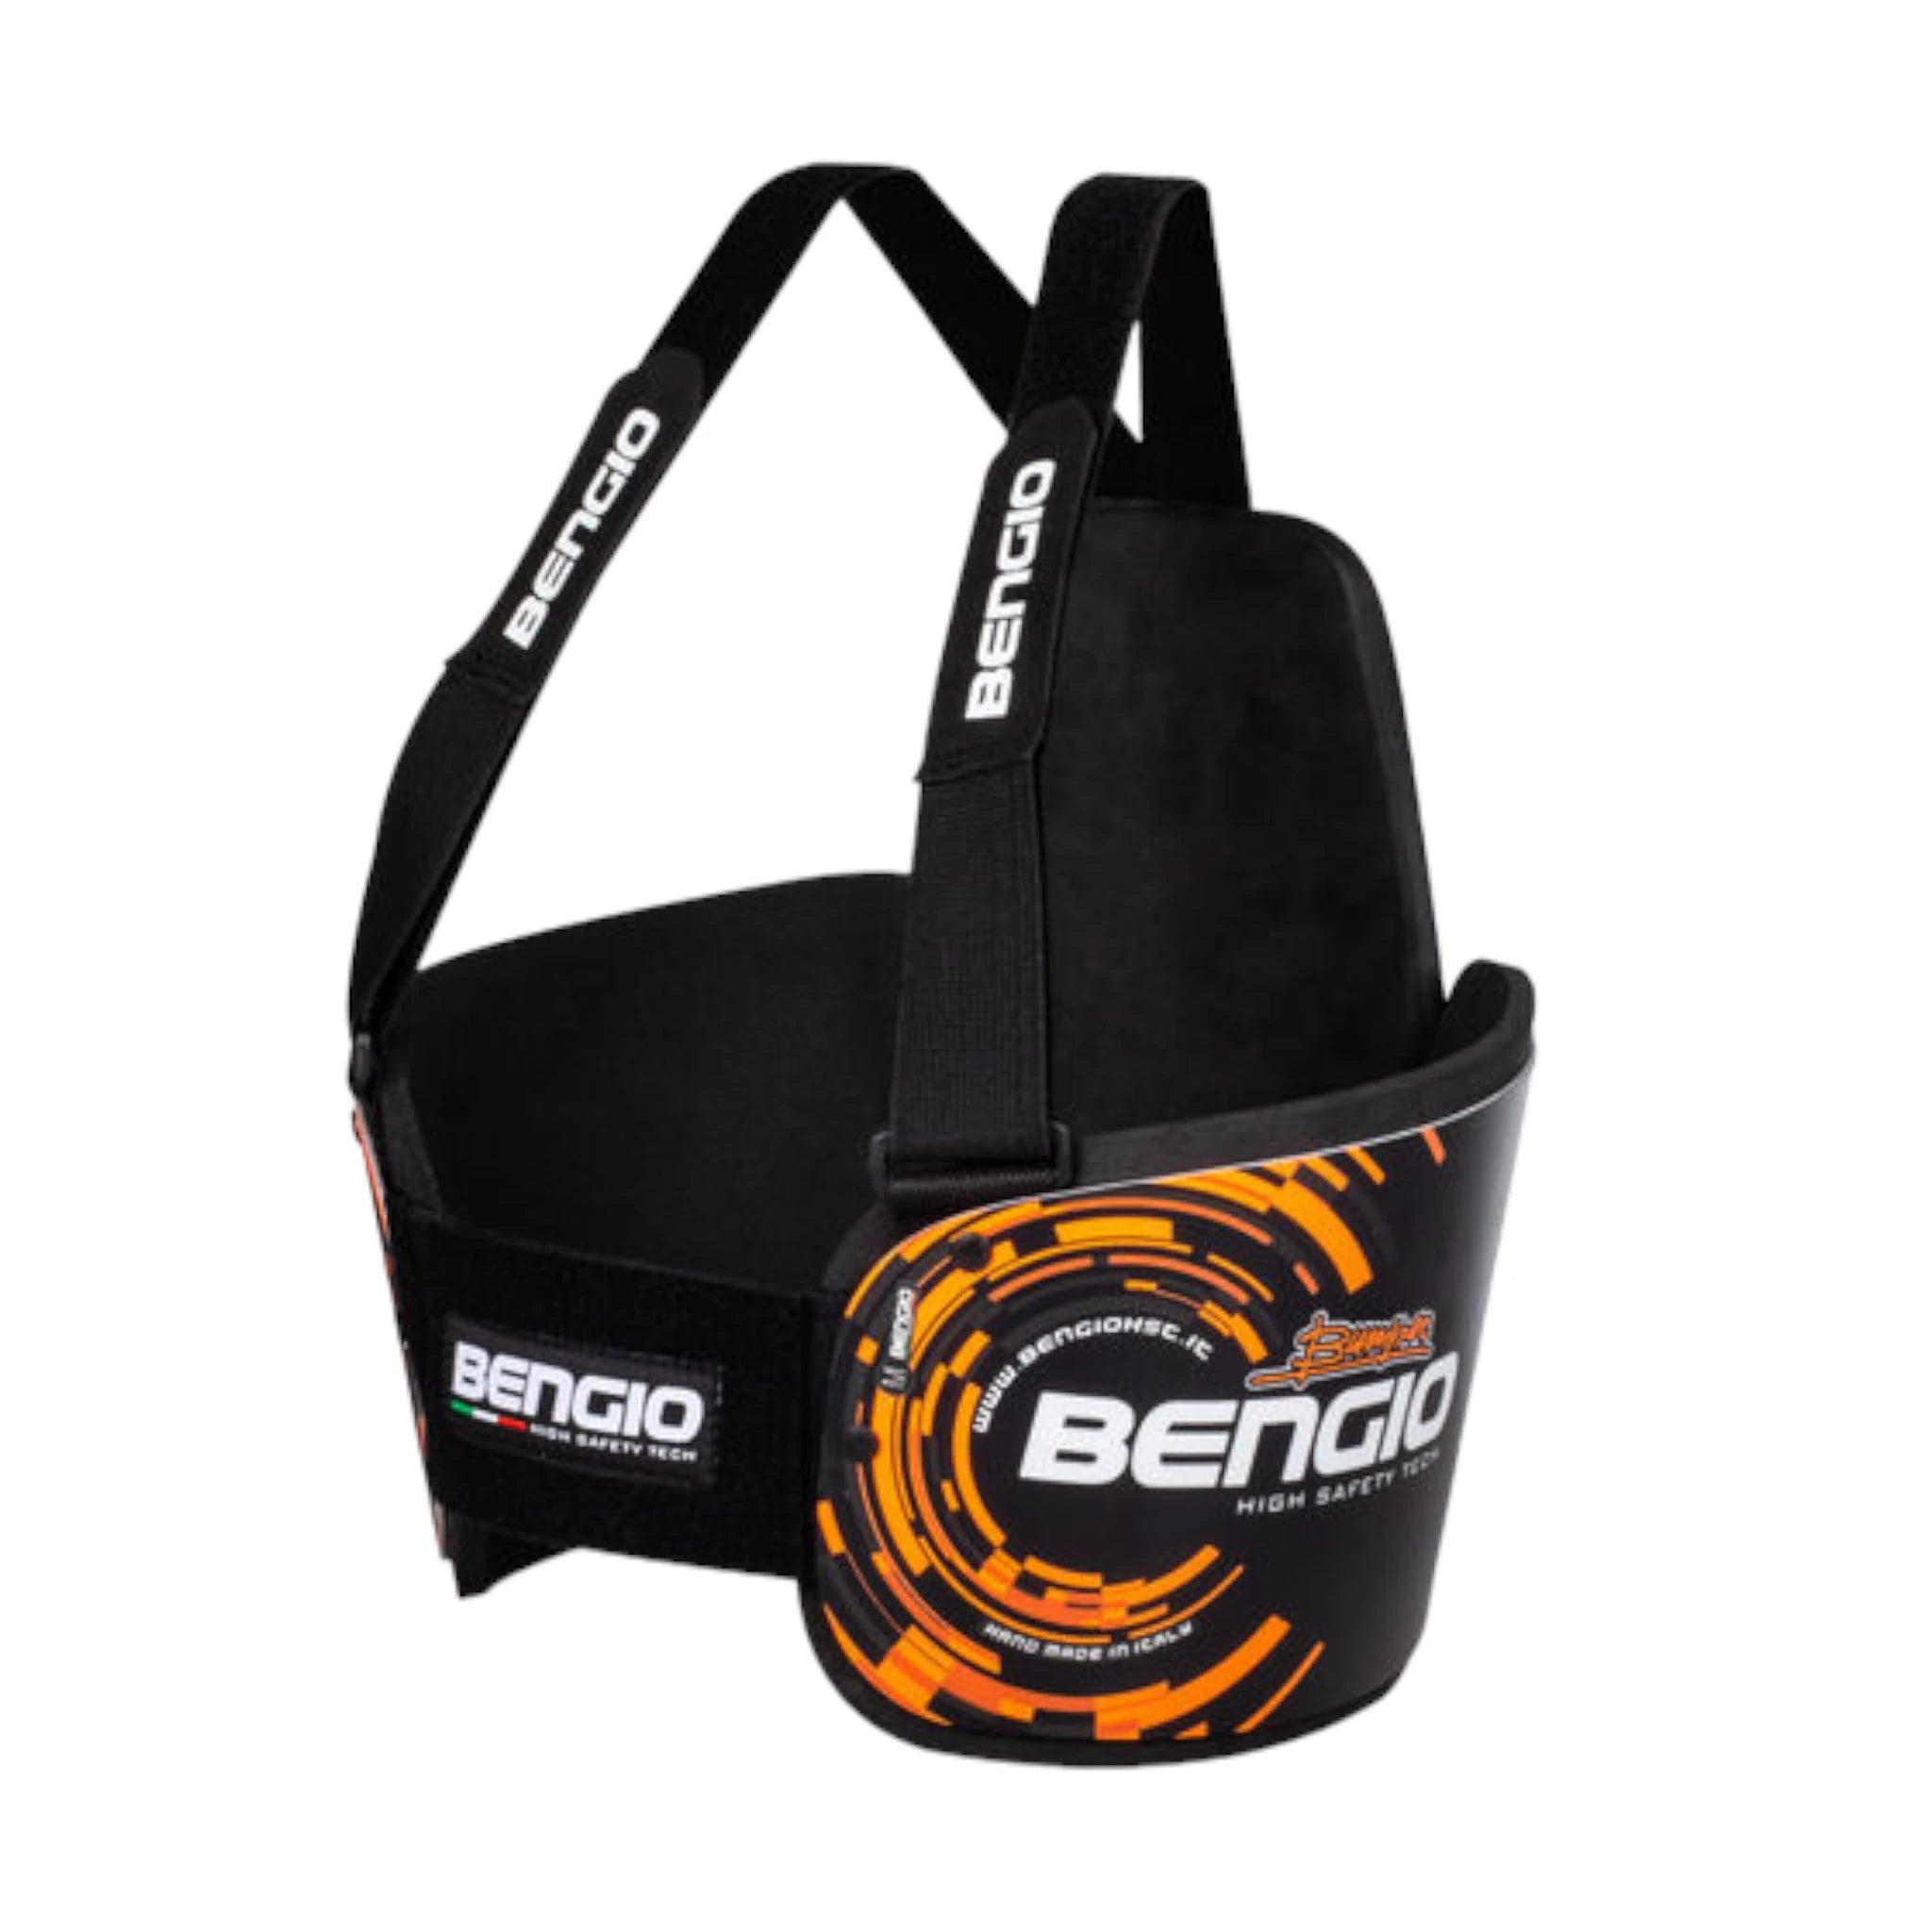 Bengio Bumper Plus Karting Rib Protector